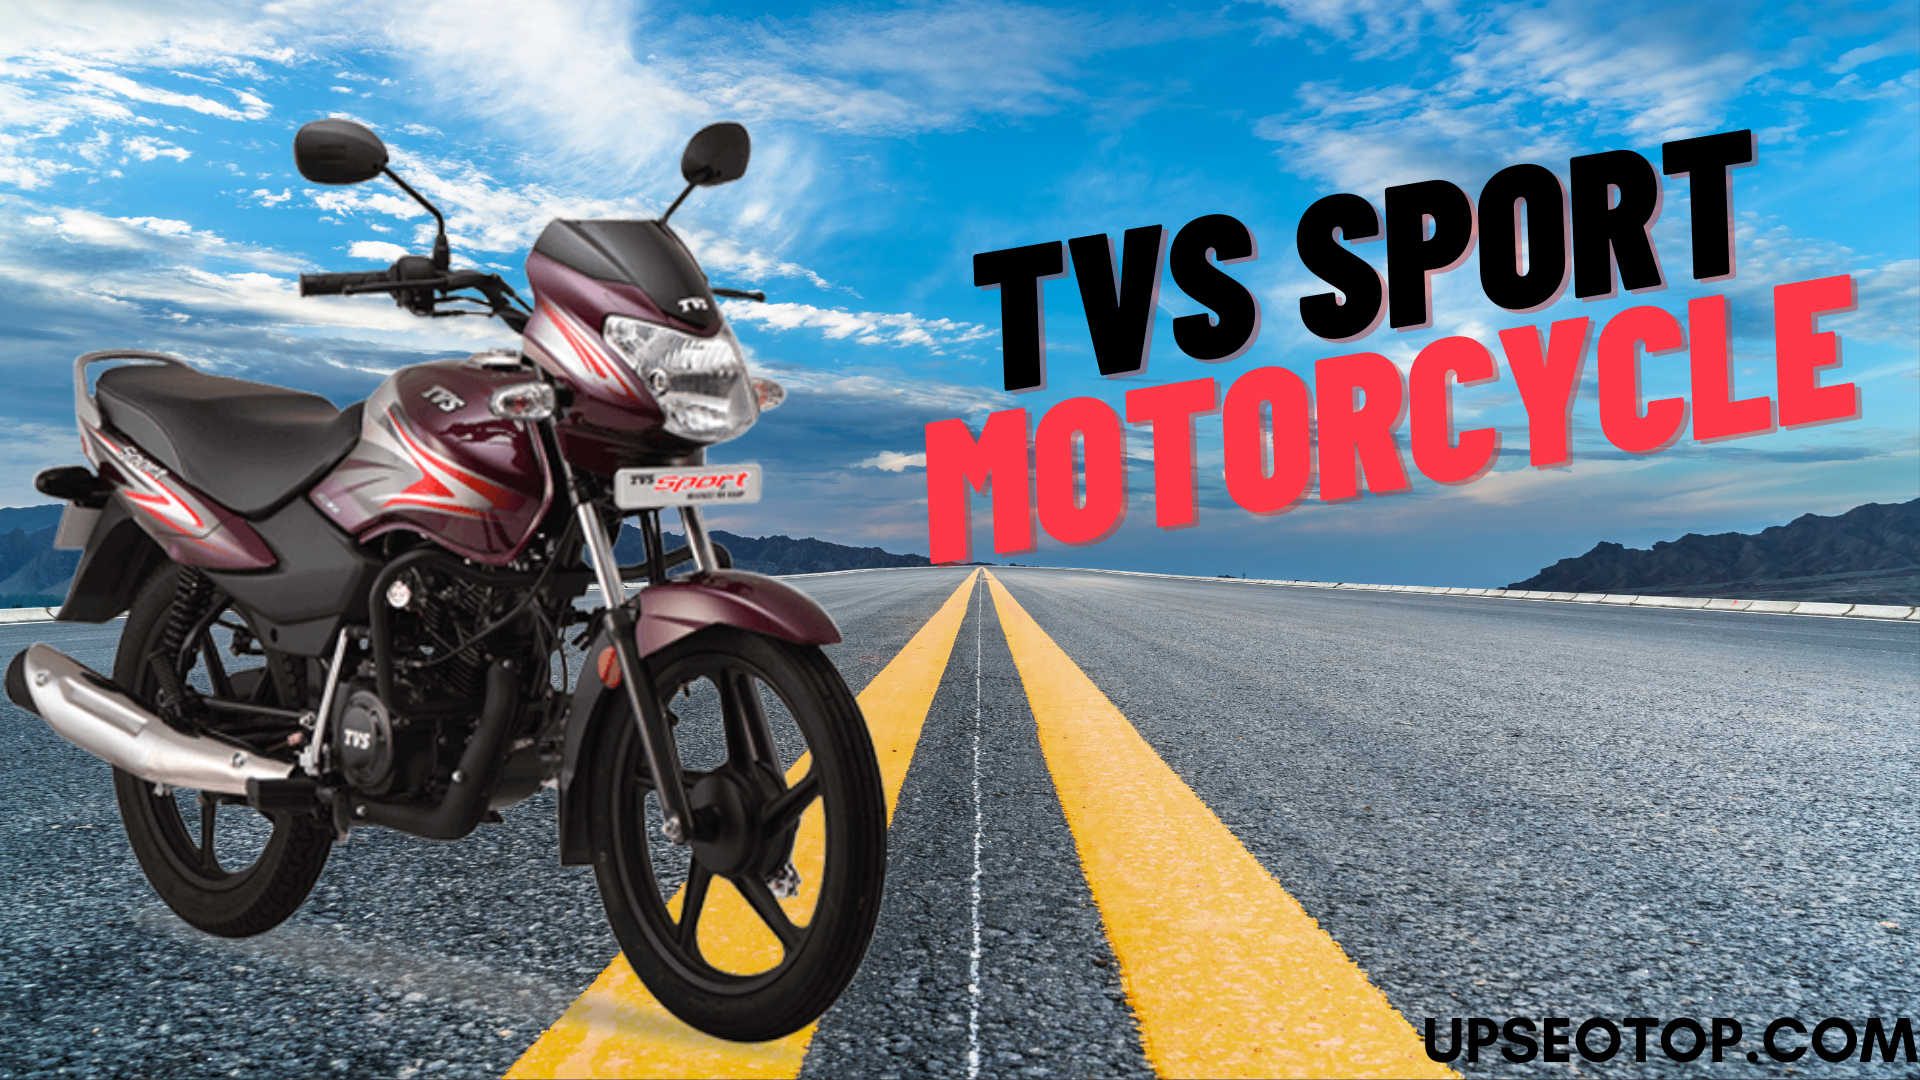 TVS Sport Motorcycle